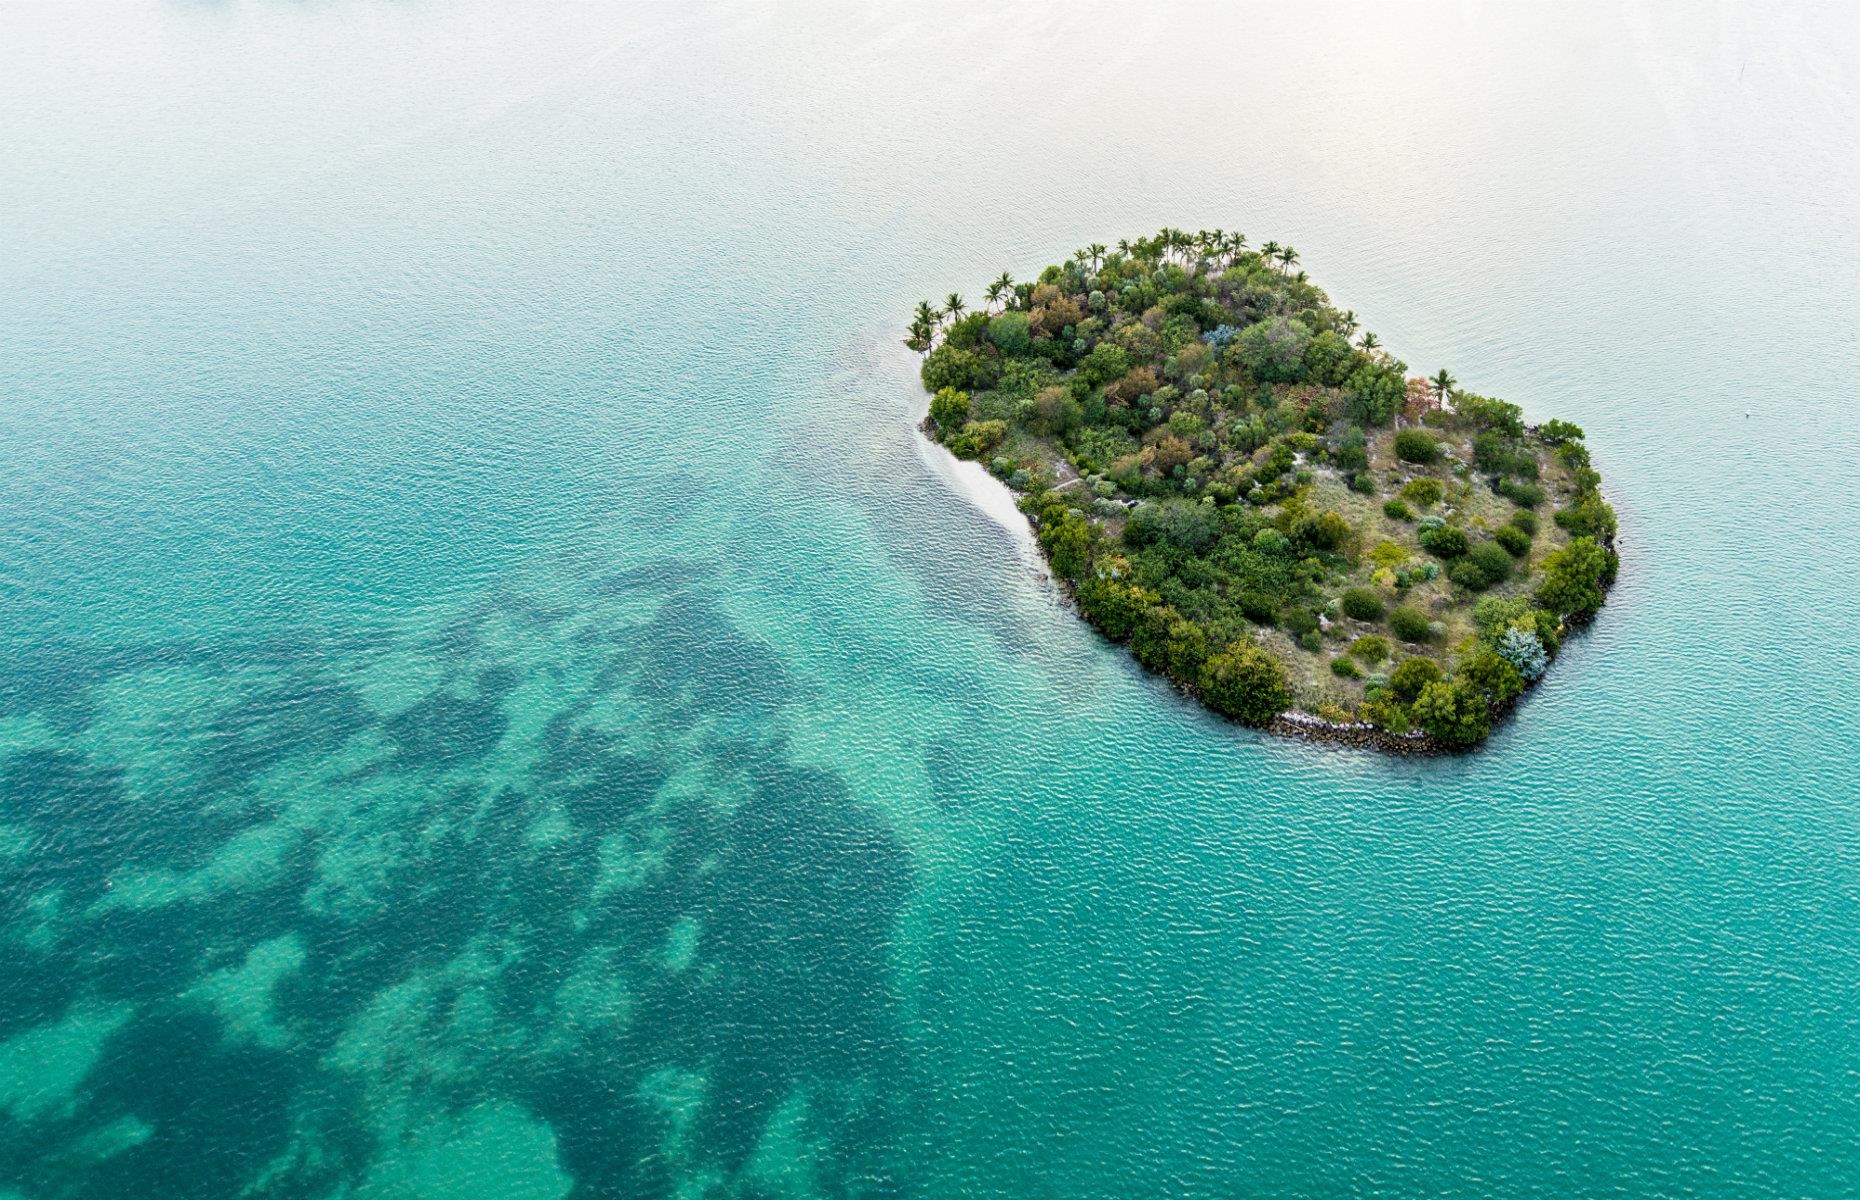 Private islands